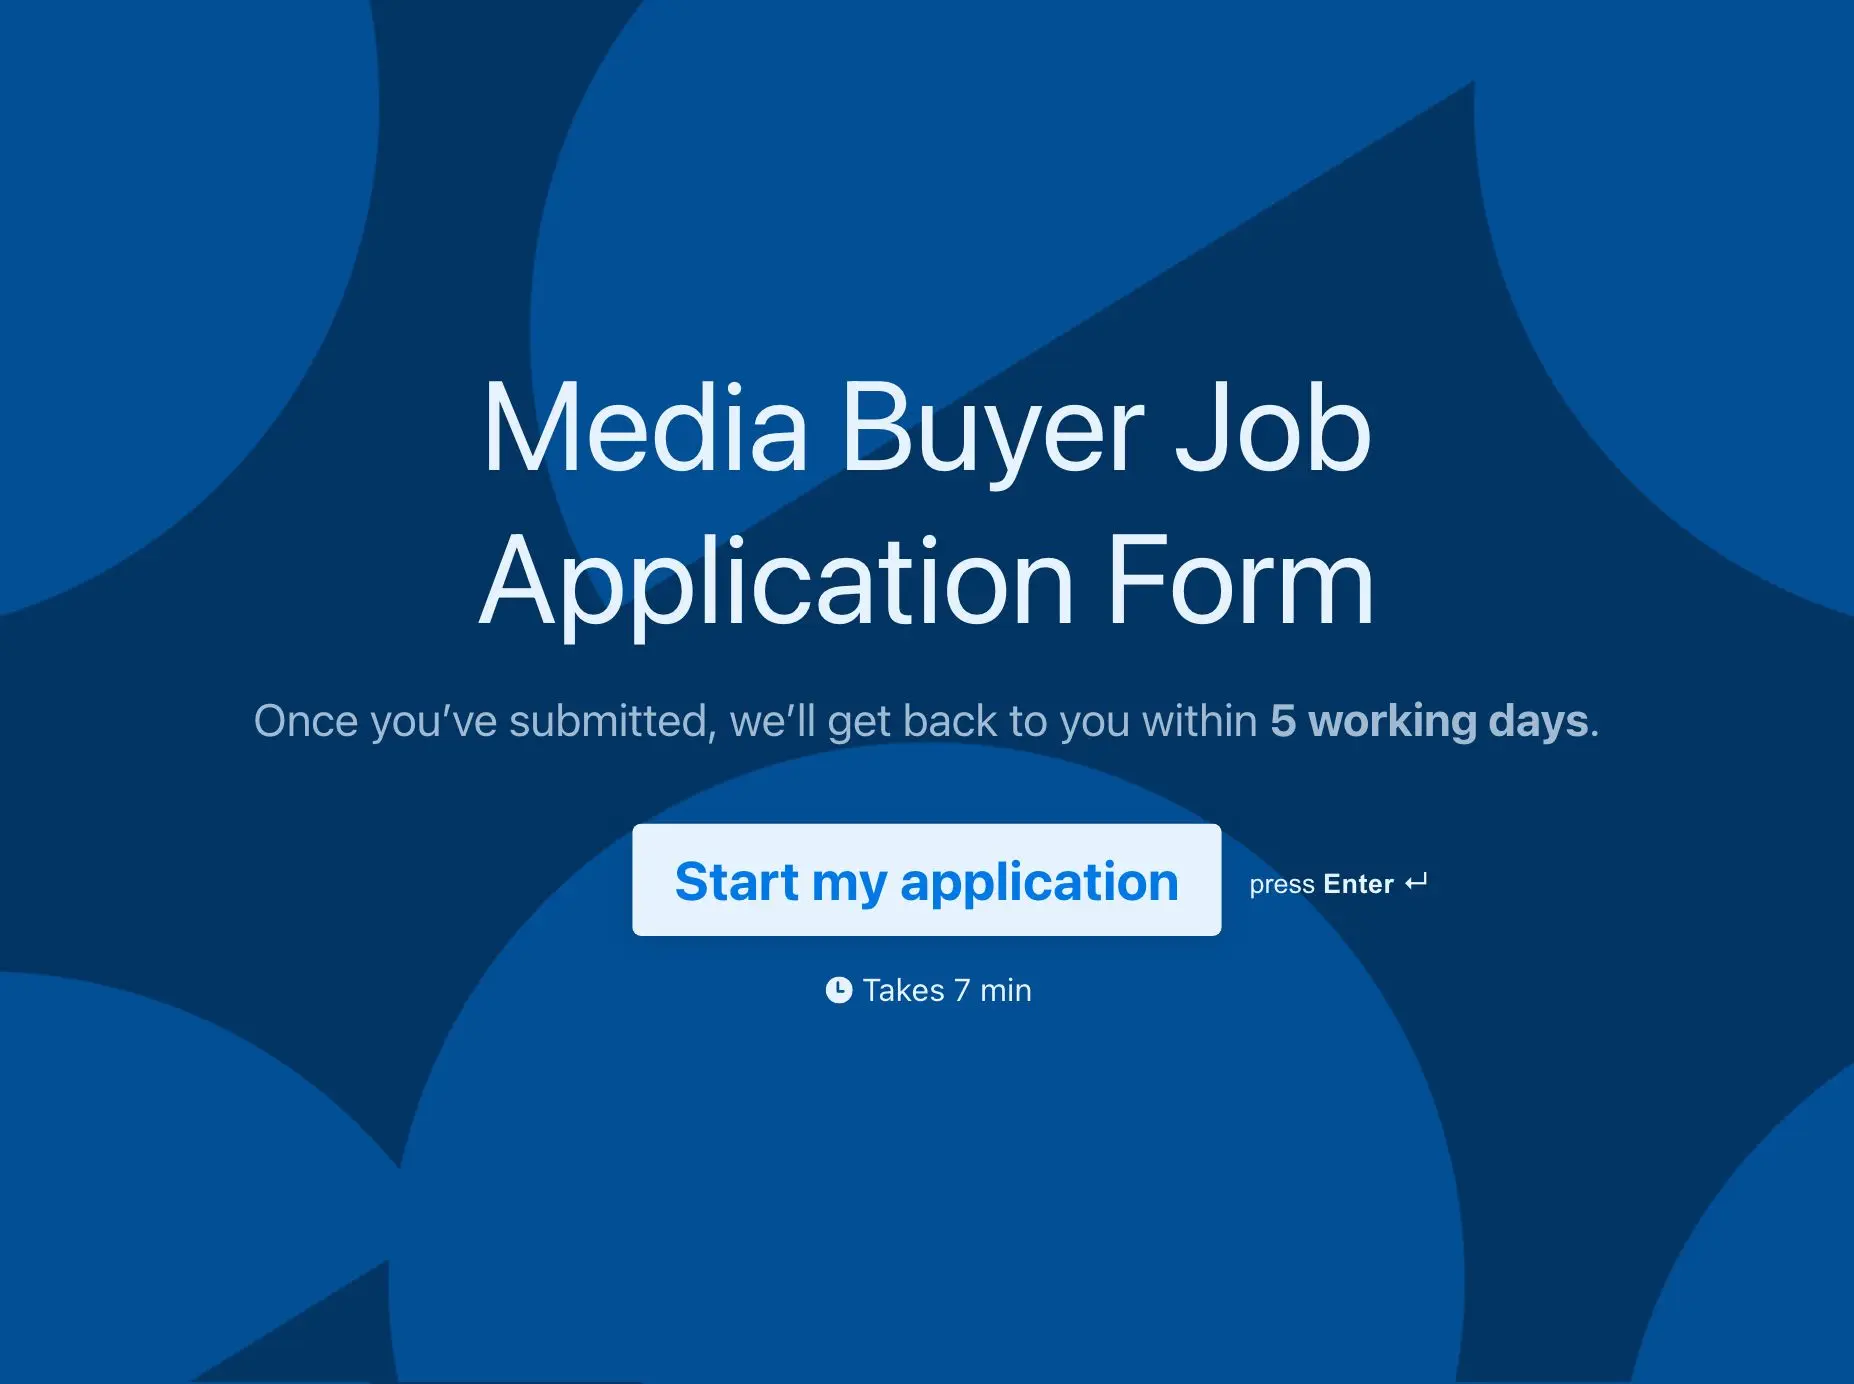 Media Buyer Job Application Form Template Hero